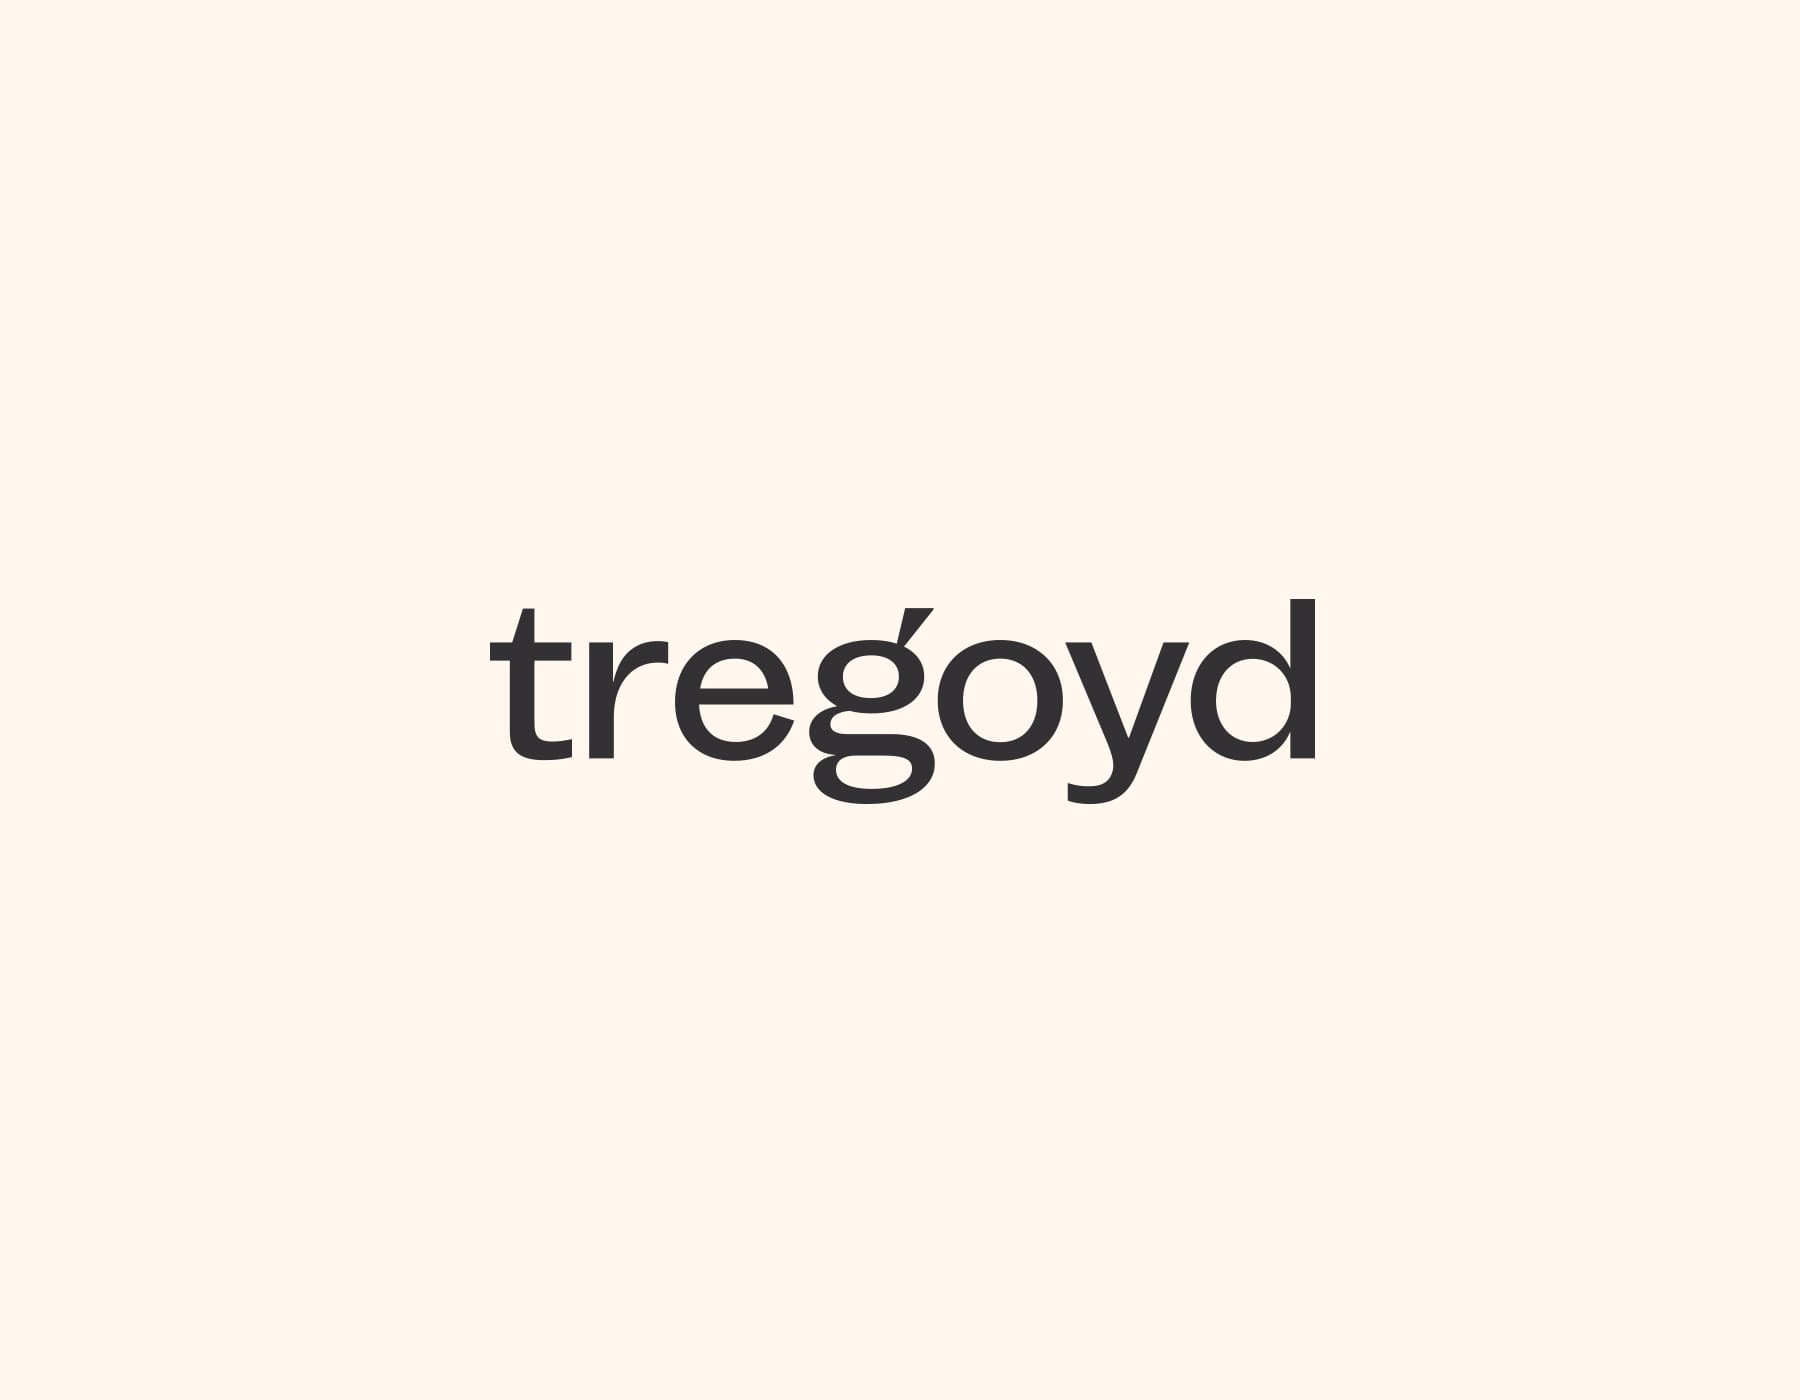 Tregoyd identity by Colour Format